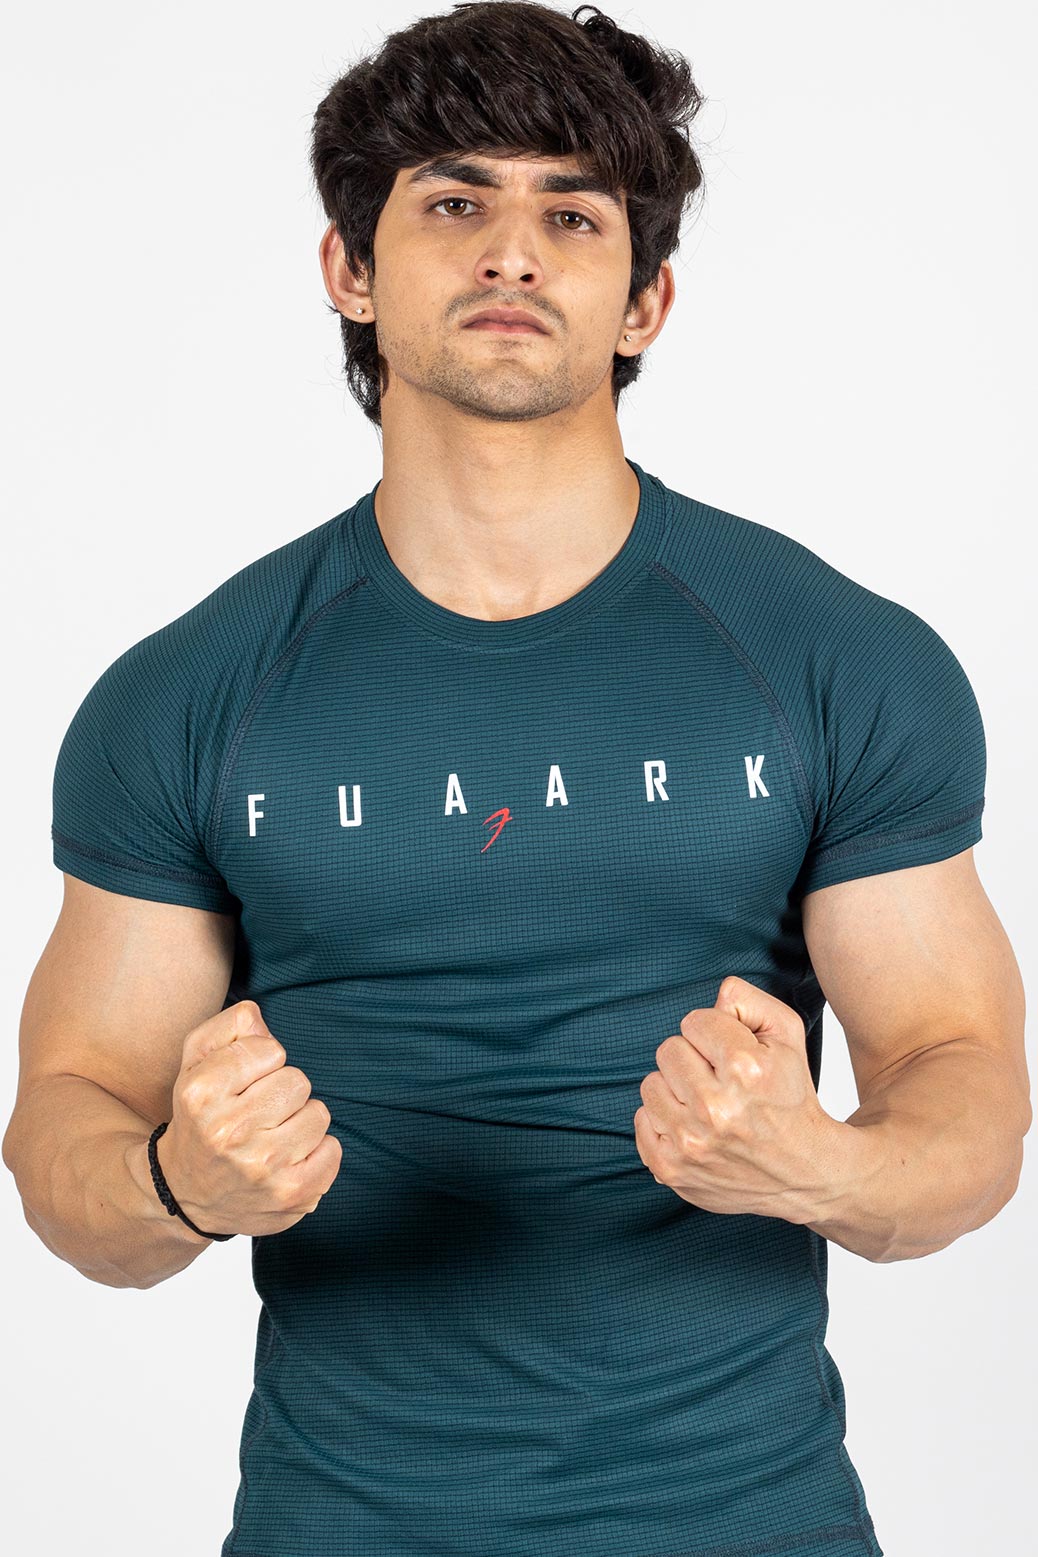 Buy Fuaark Melange Sports and Gym Tshirt Green Online at Best